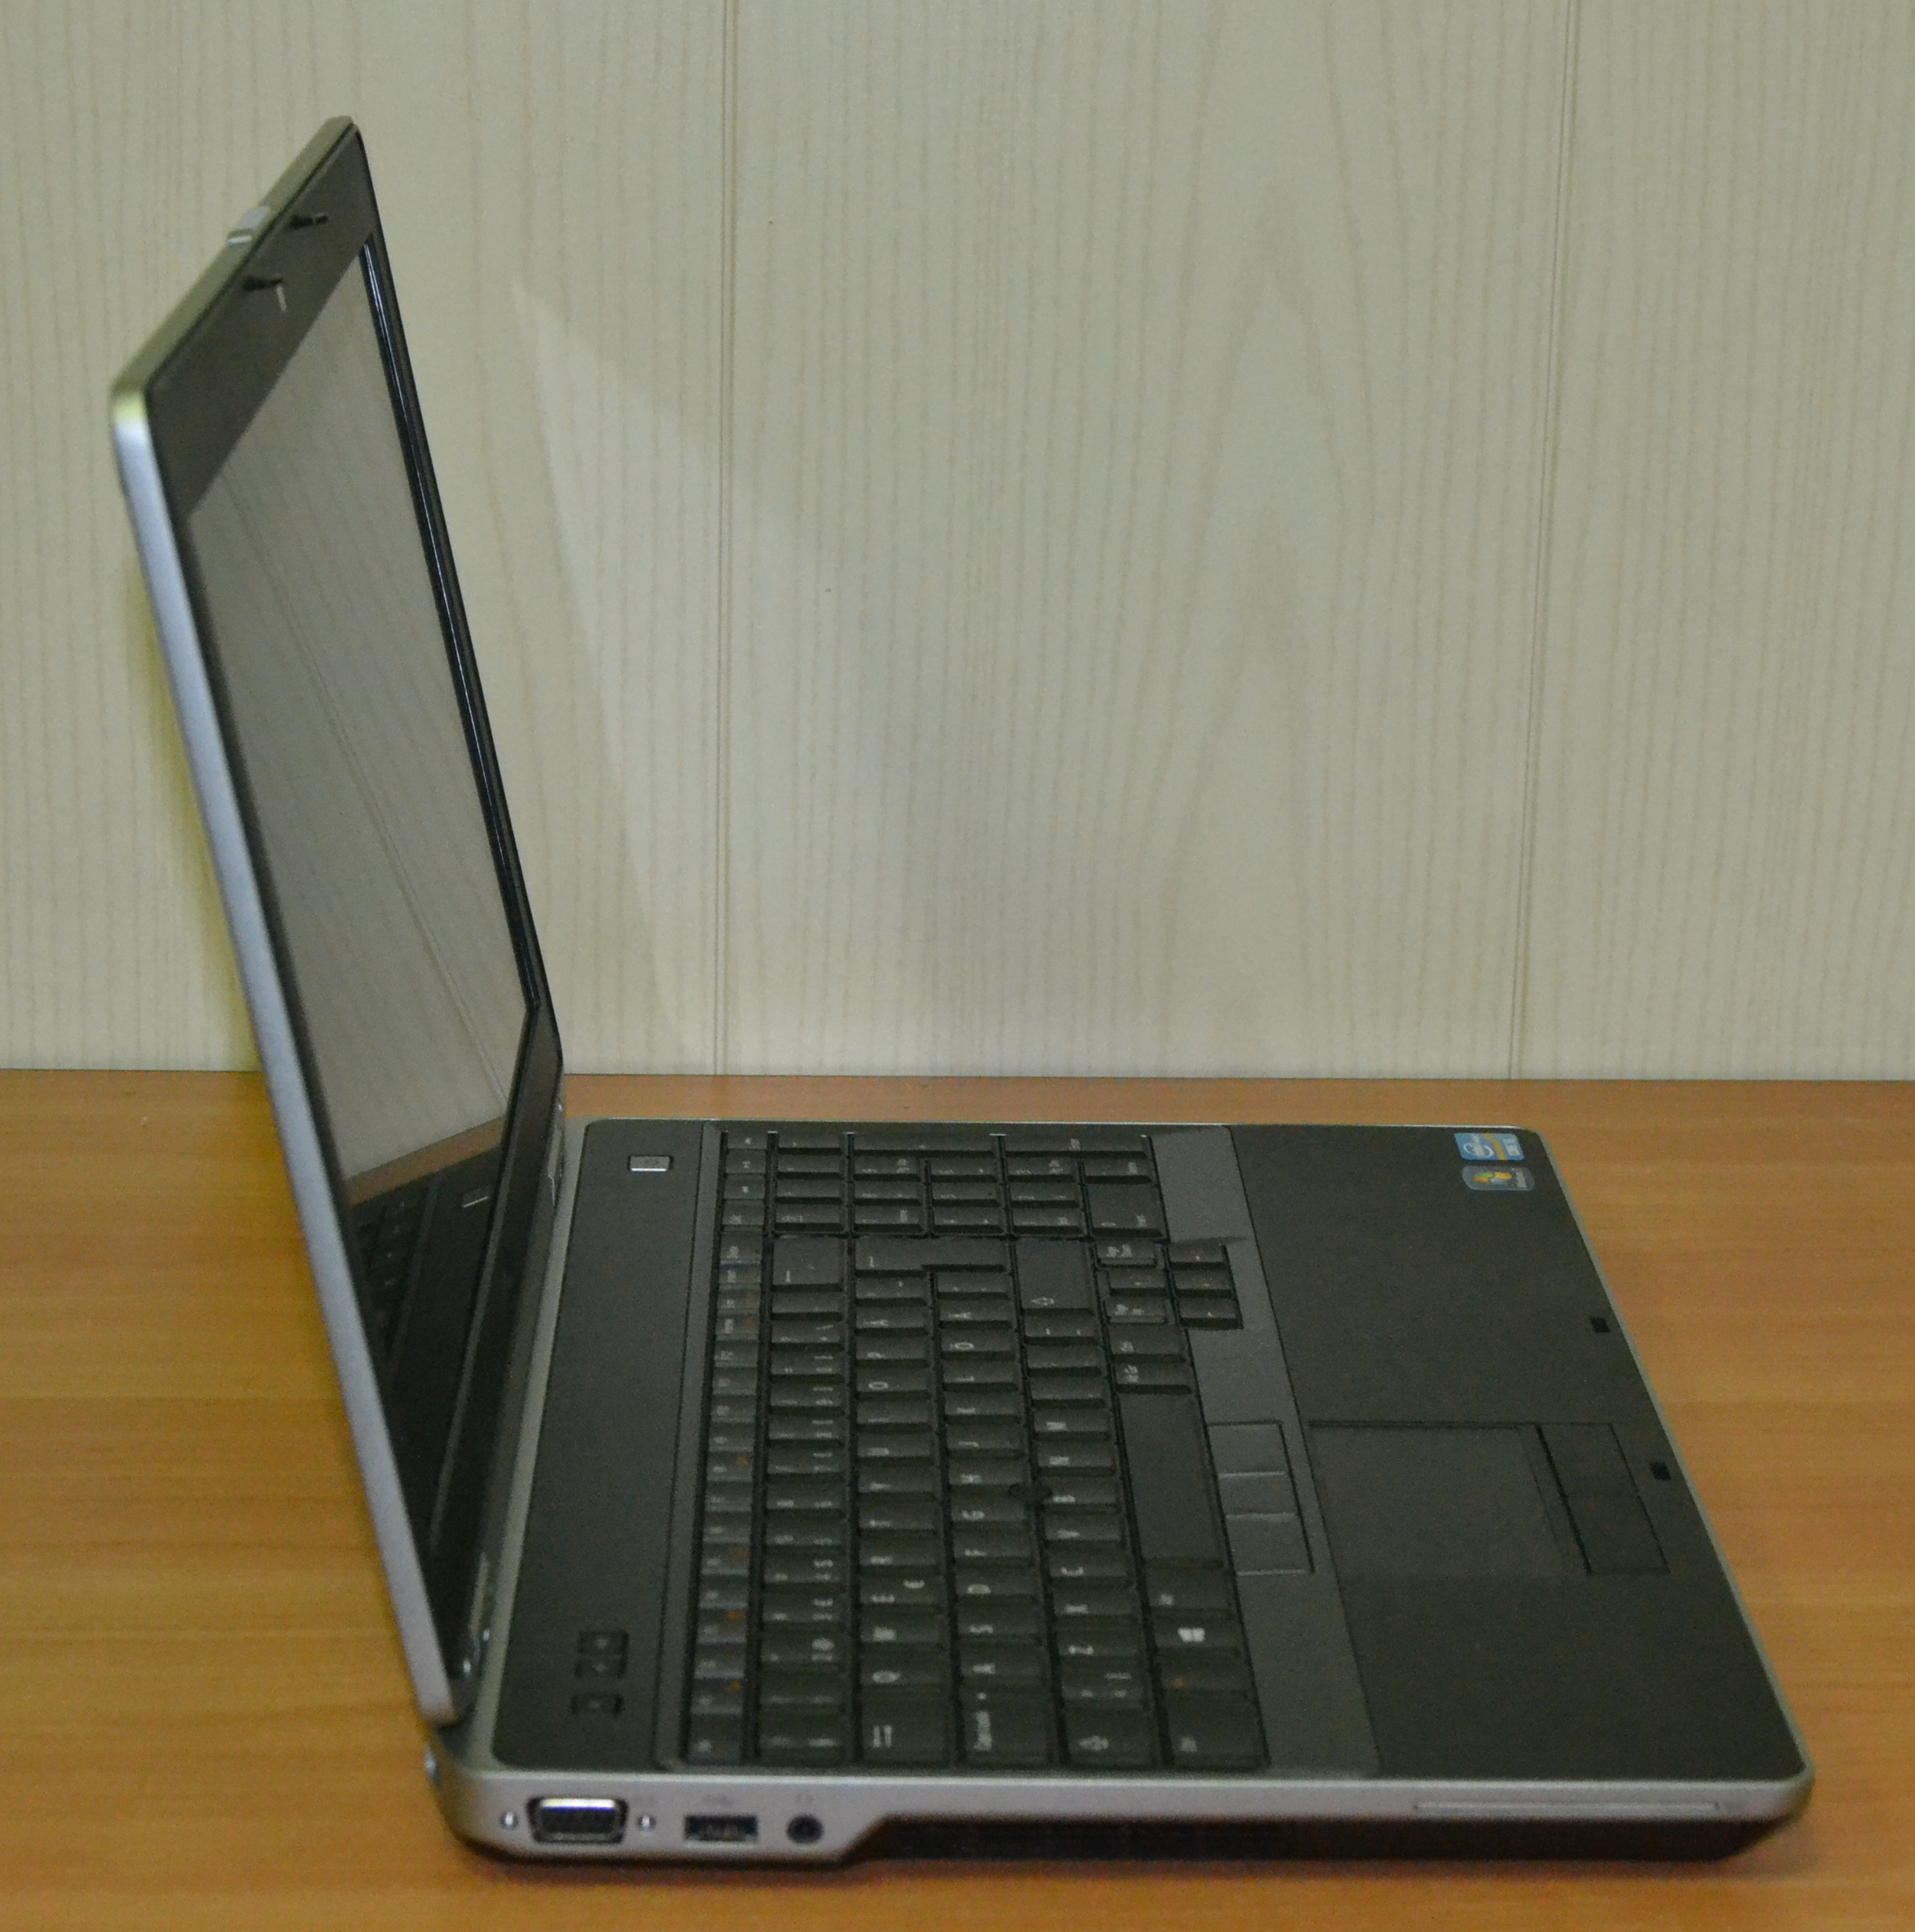 Dell E6530 — купить б/у ноутбук за 23,500 руб. с гарантией 6 месяцев